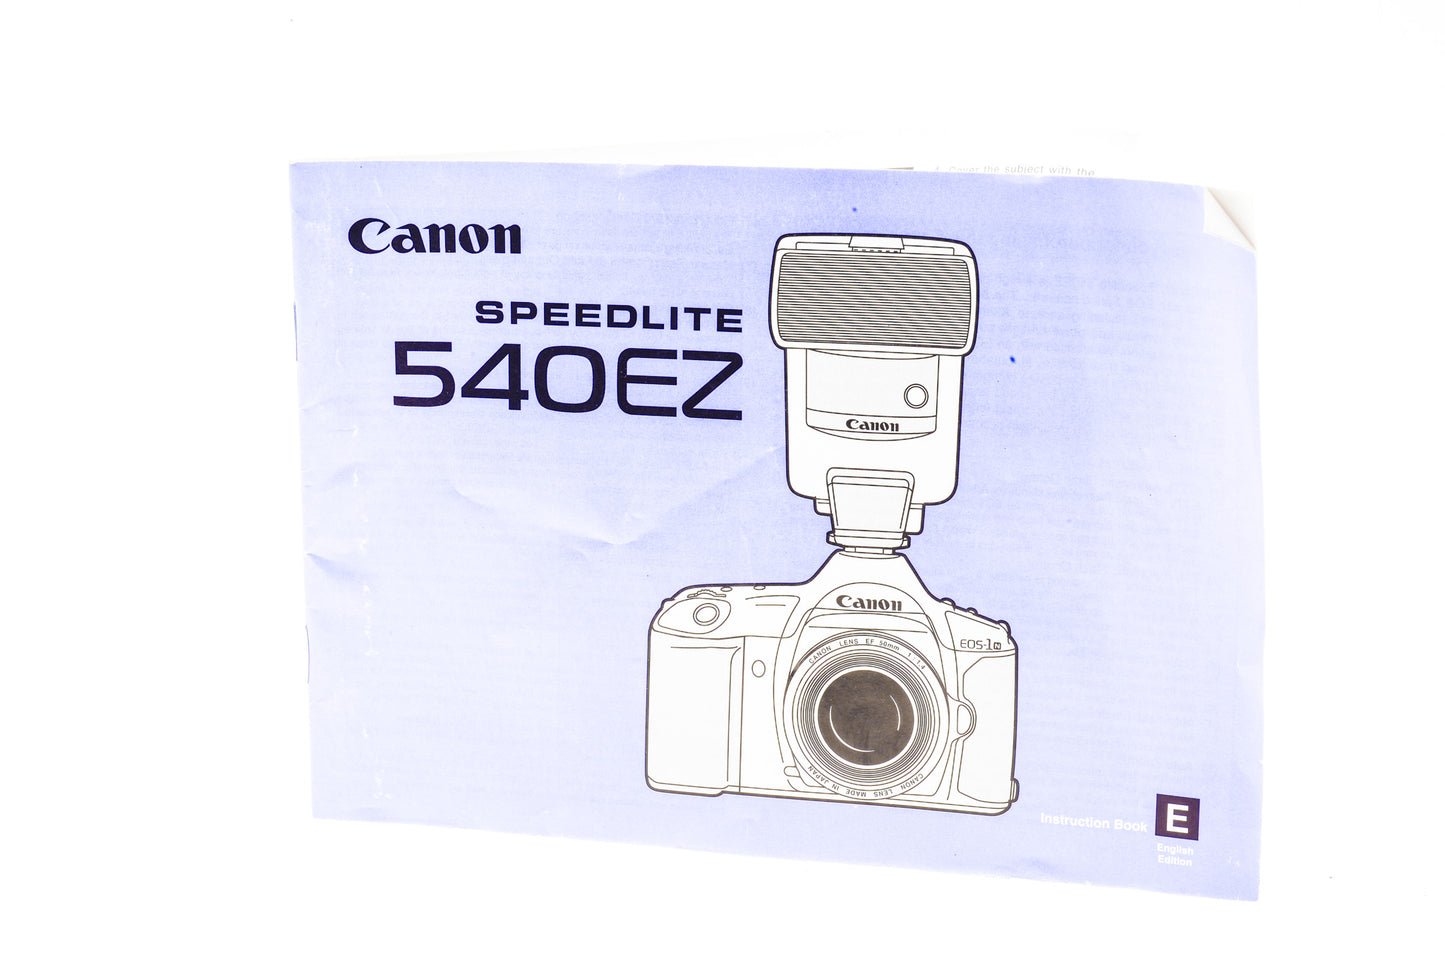 Canon Speedlite 540EZ Instruction Manual